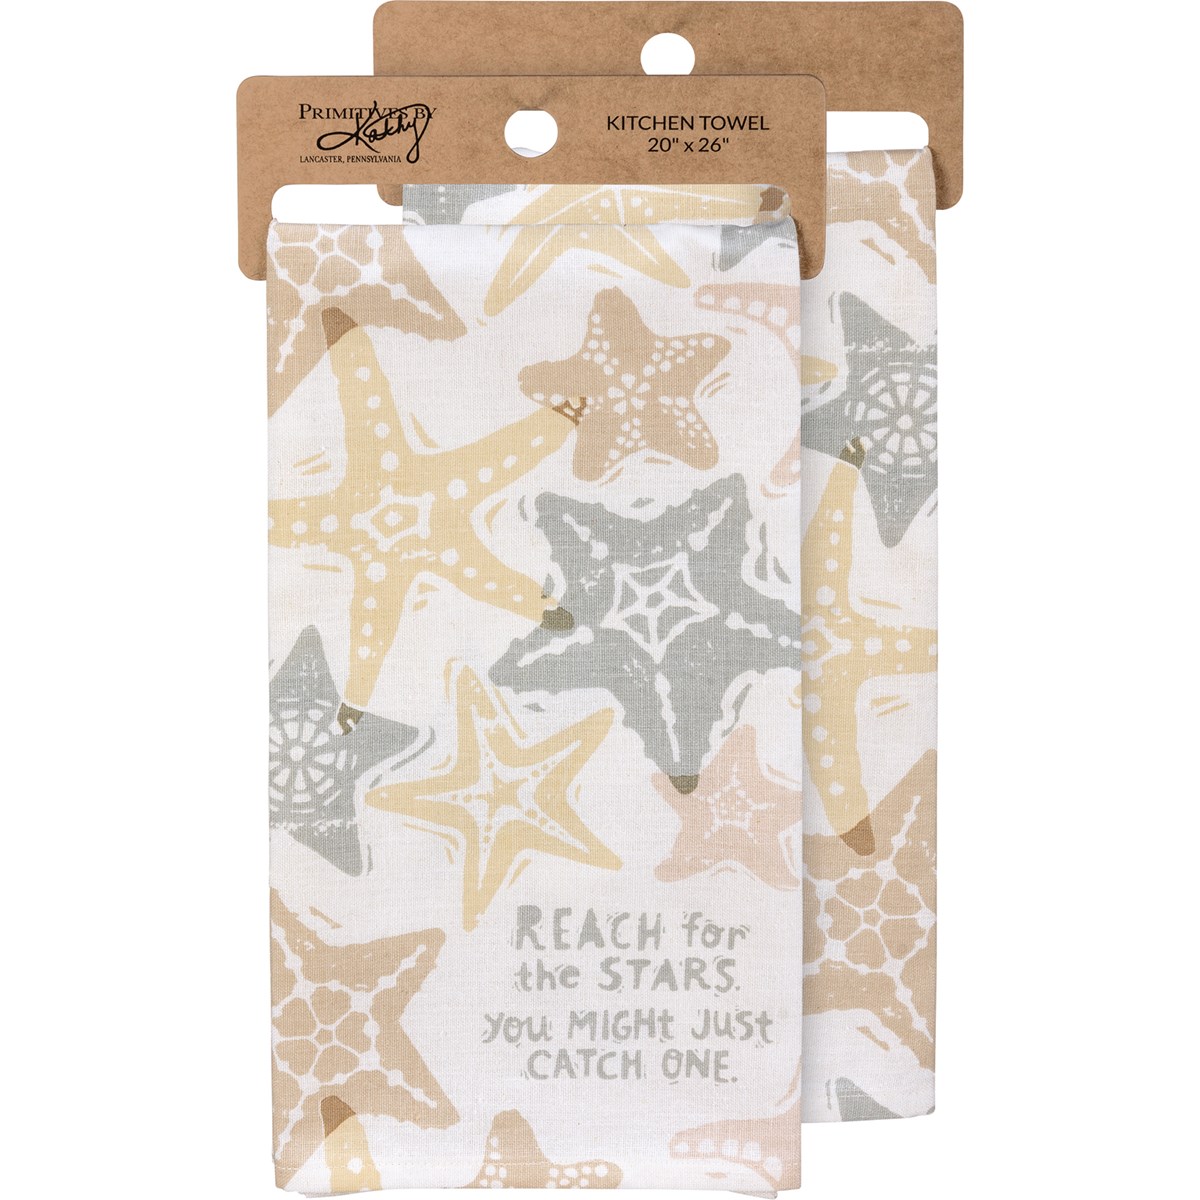 Reach For The Stars Beach Kitchen Towel - Cotton, Linen